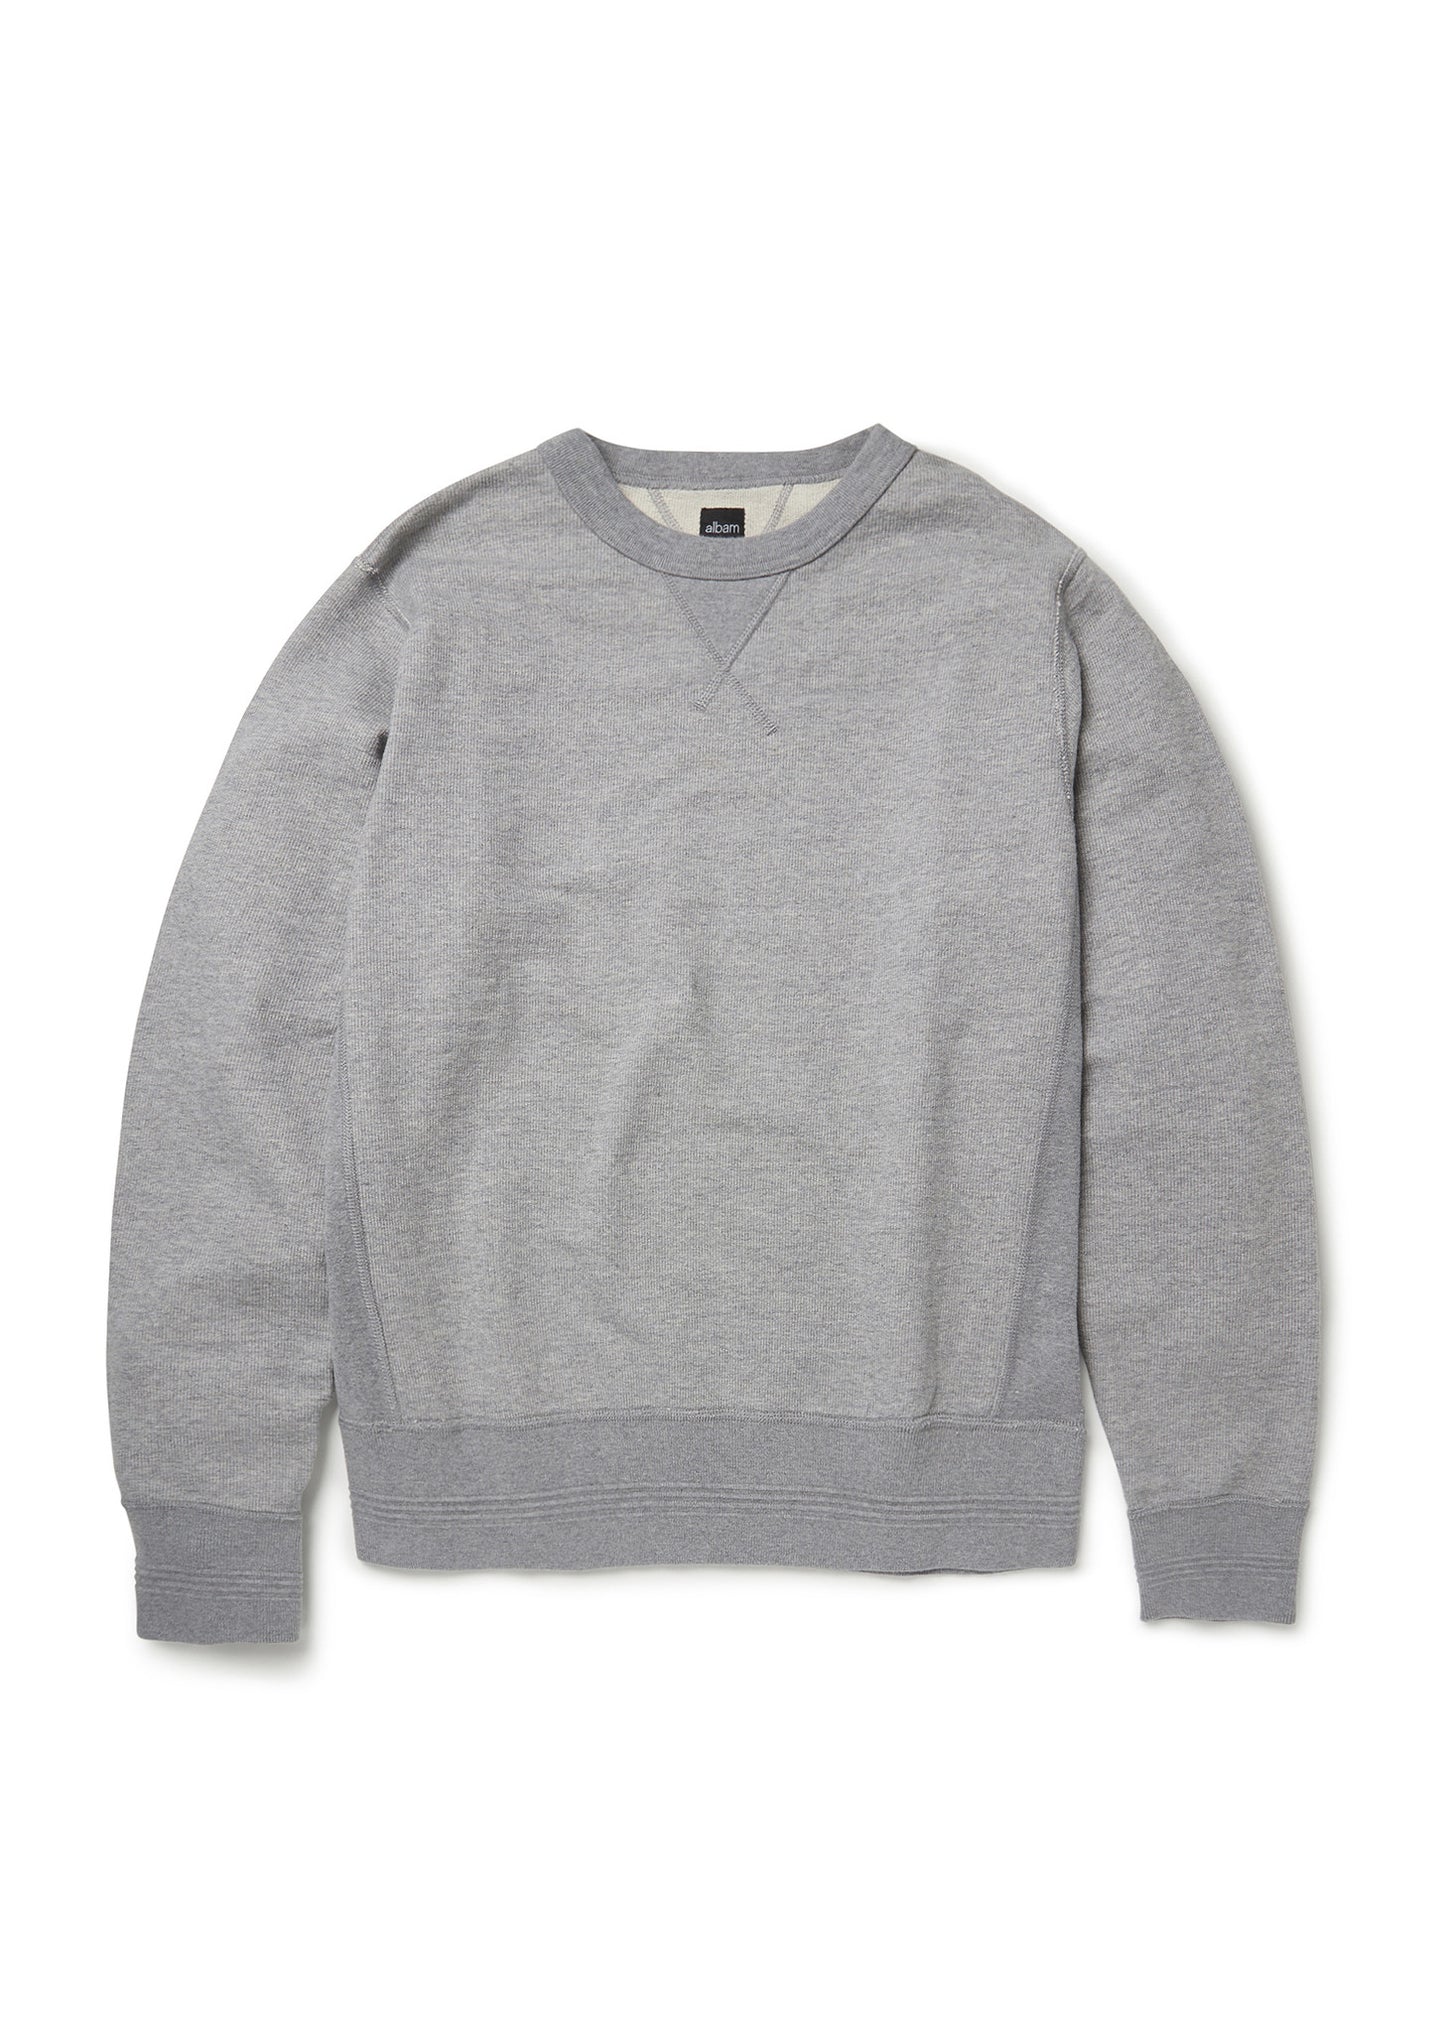 Sweatshirt in Grey Marl